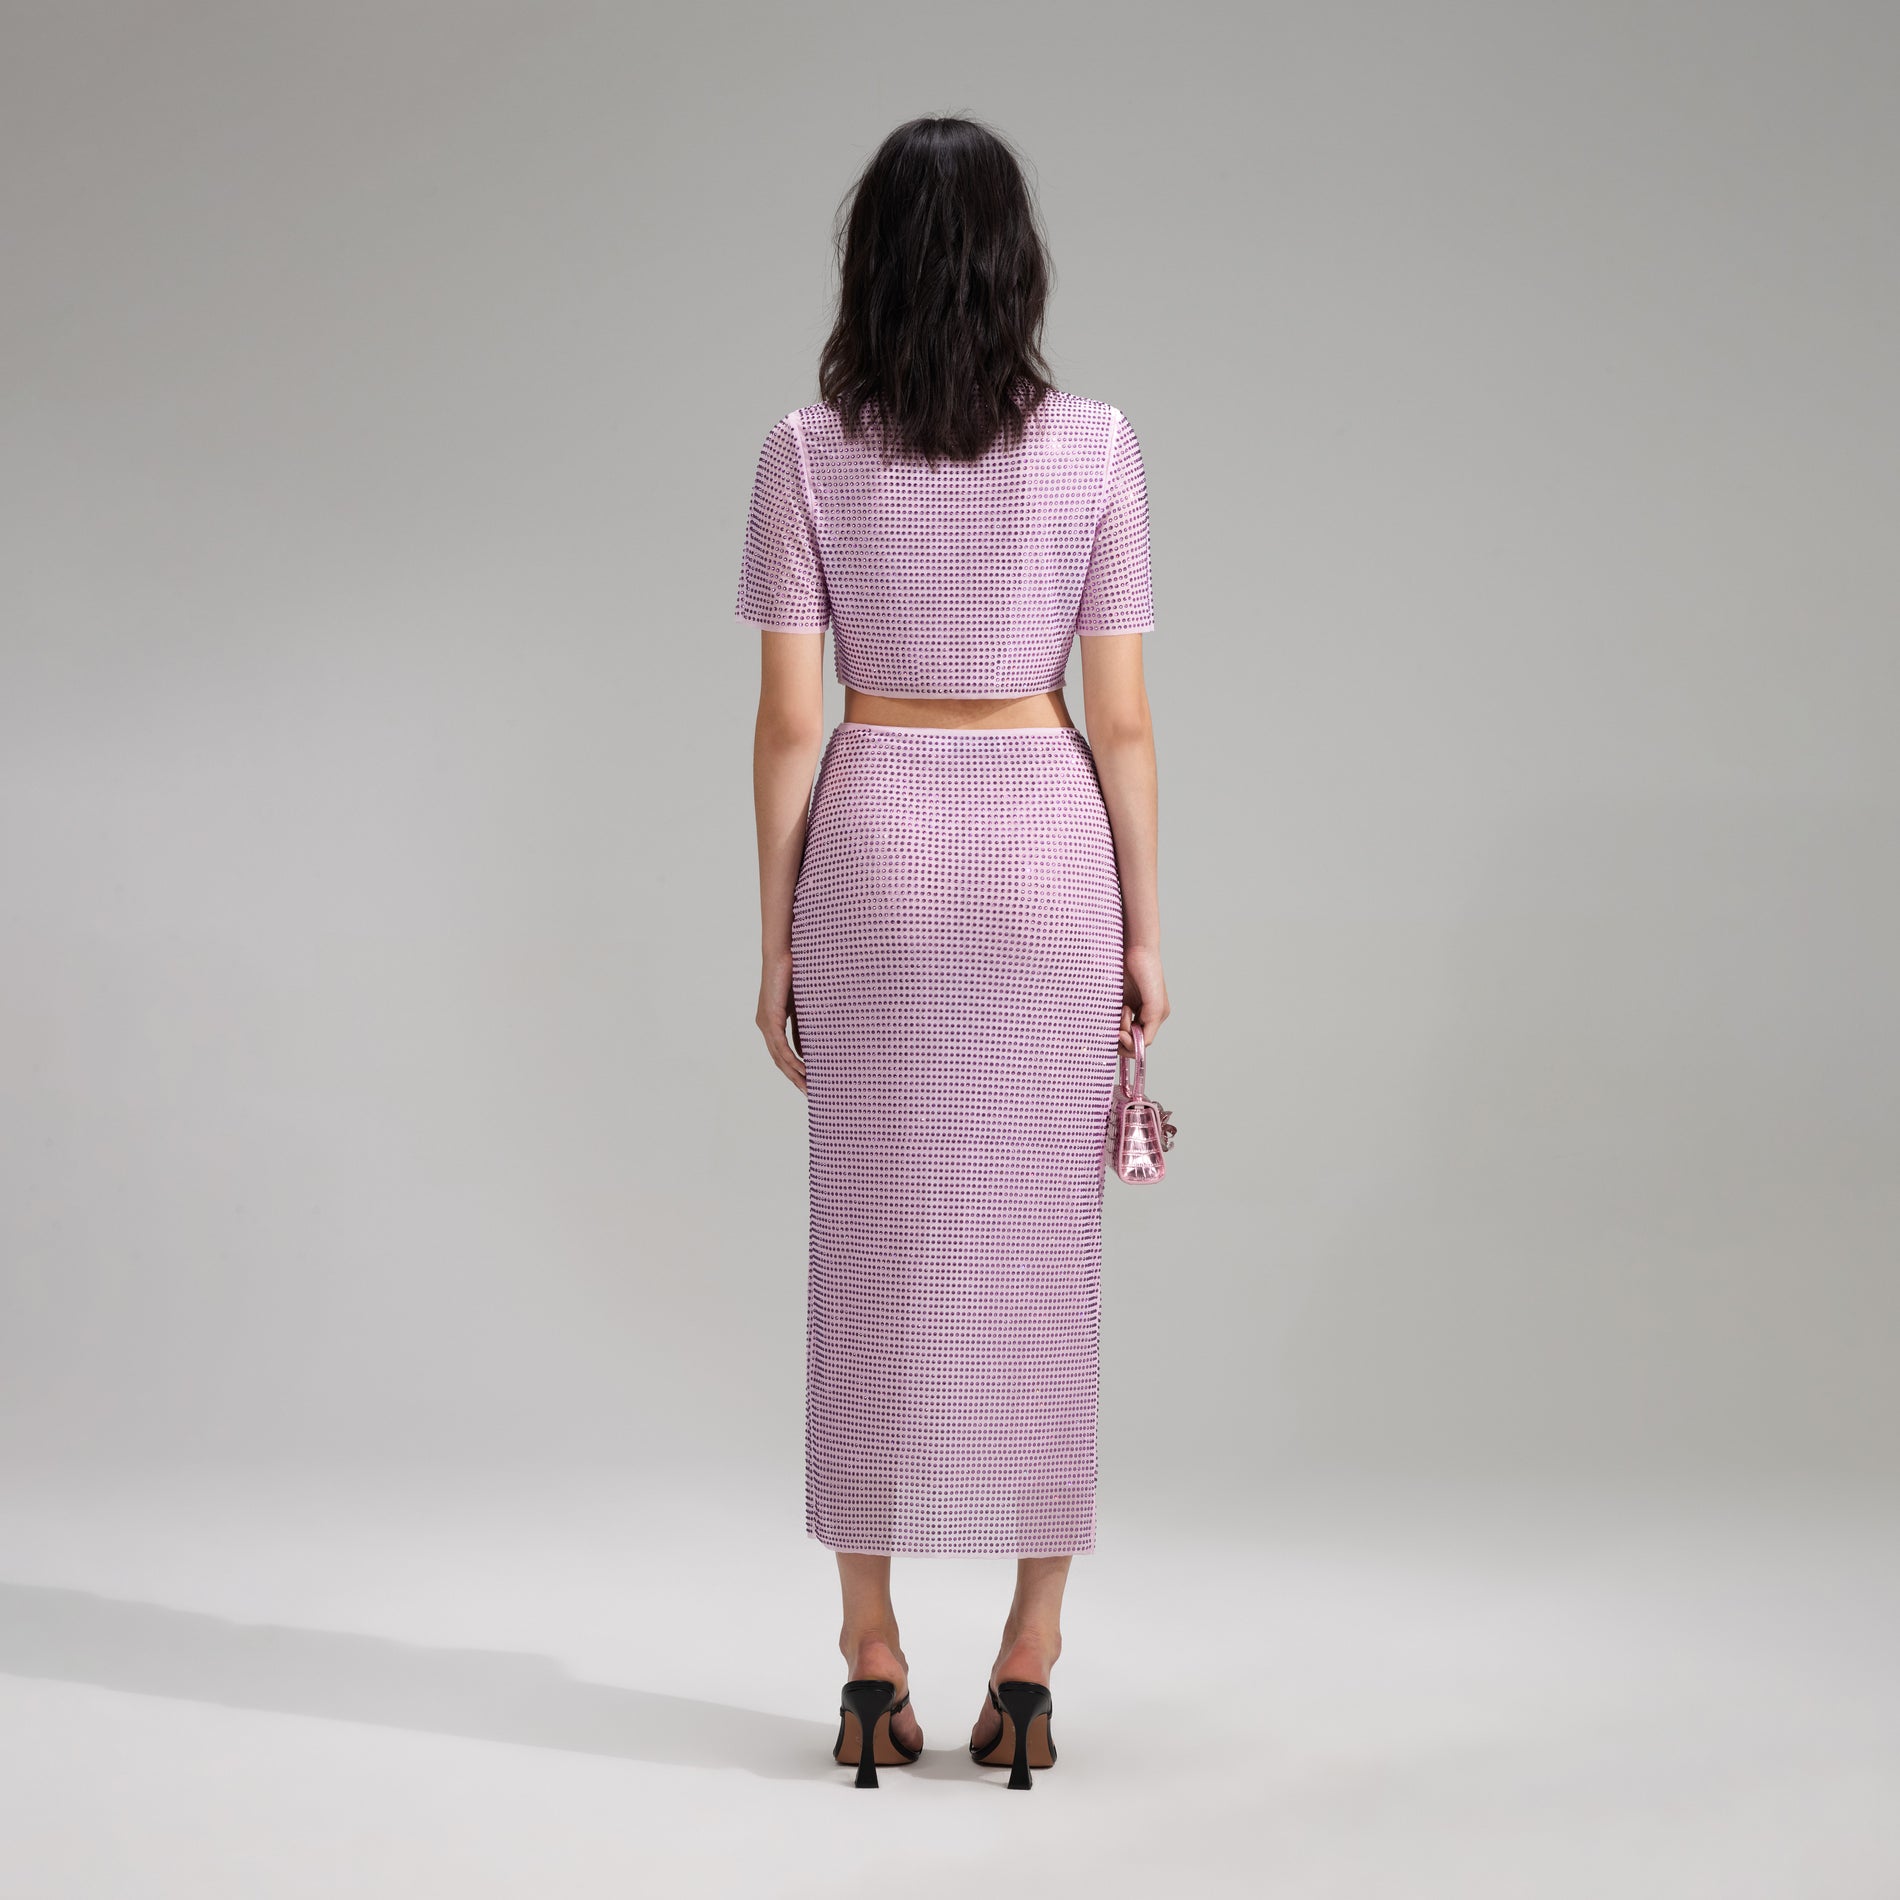 A woman wearing the Lilac Rhinestone Wrap Midi Skirt